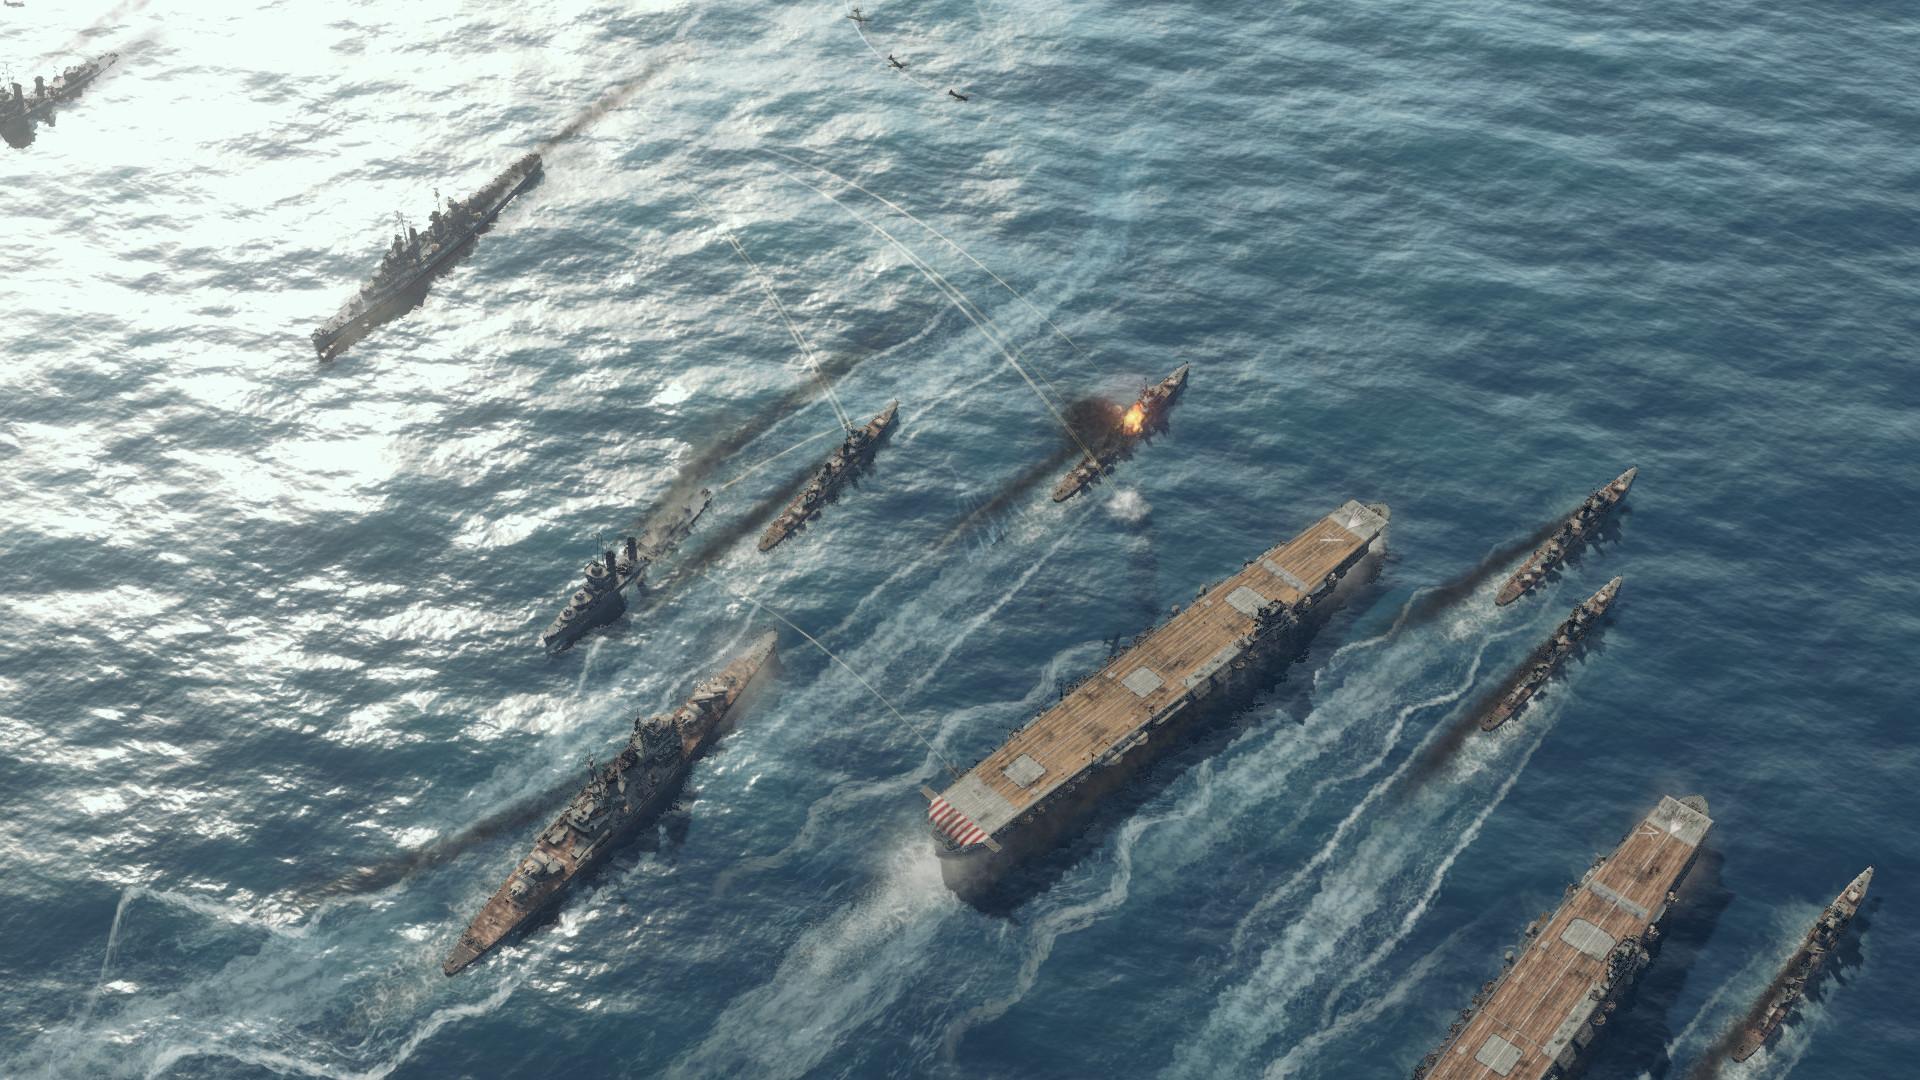 Sudden Strike 4 - The Pacific War